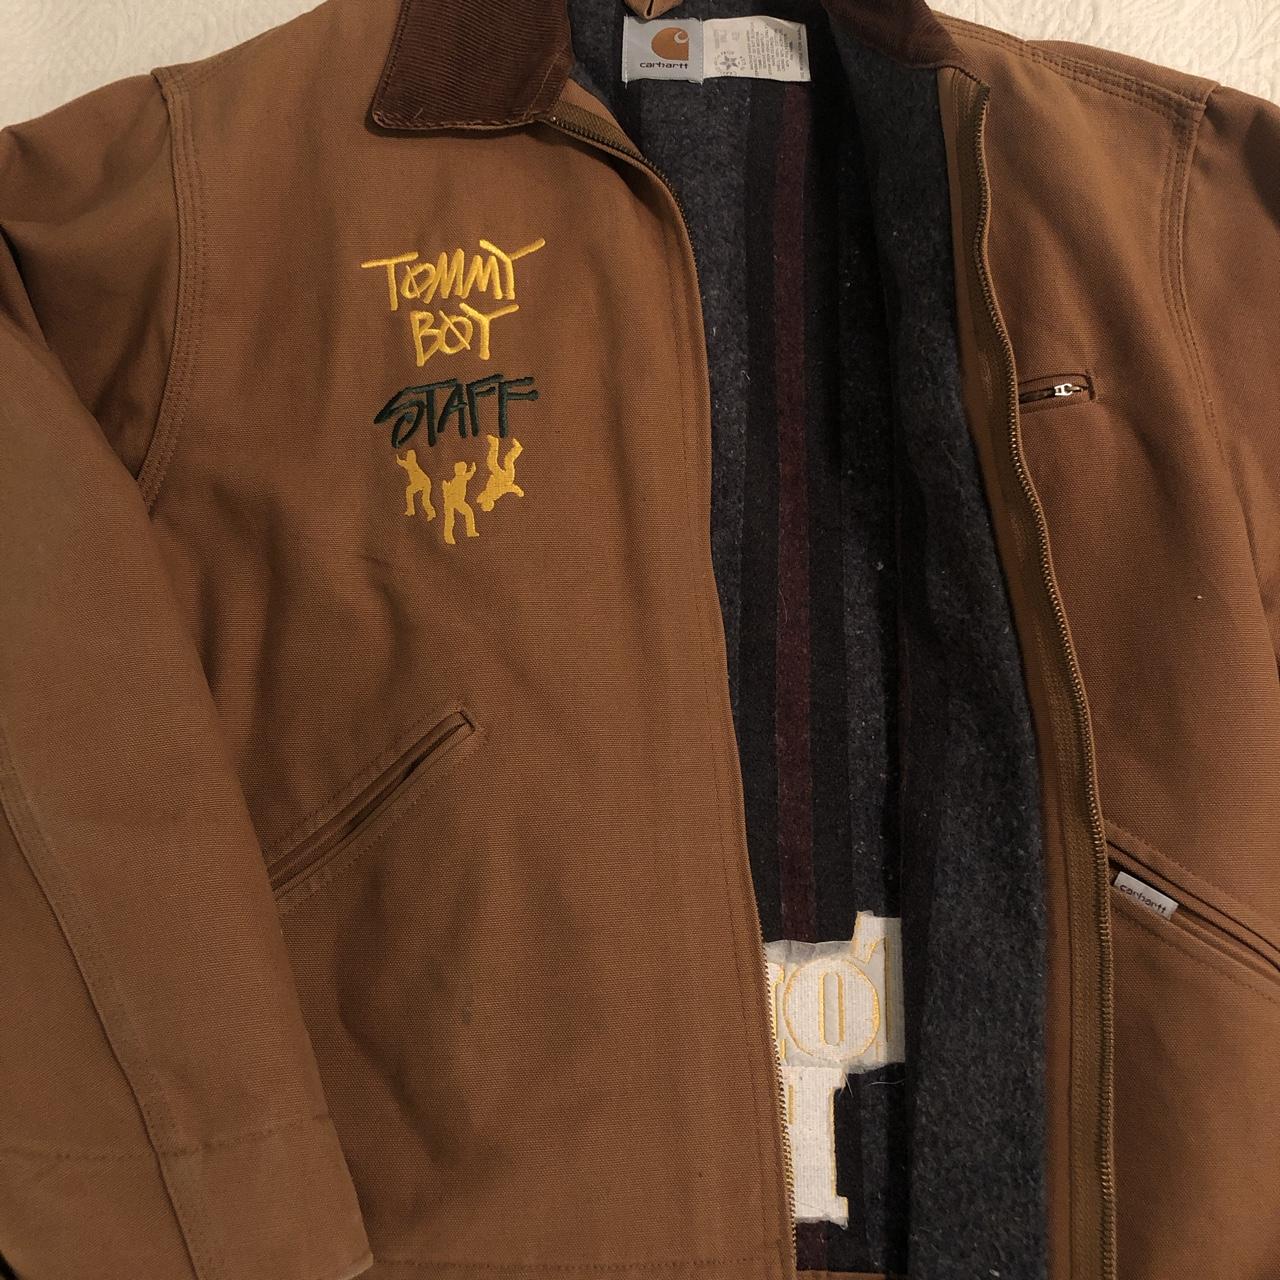 1992 carhartt stussy Tommy Boy records staff jacket....